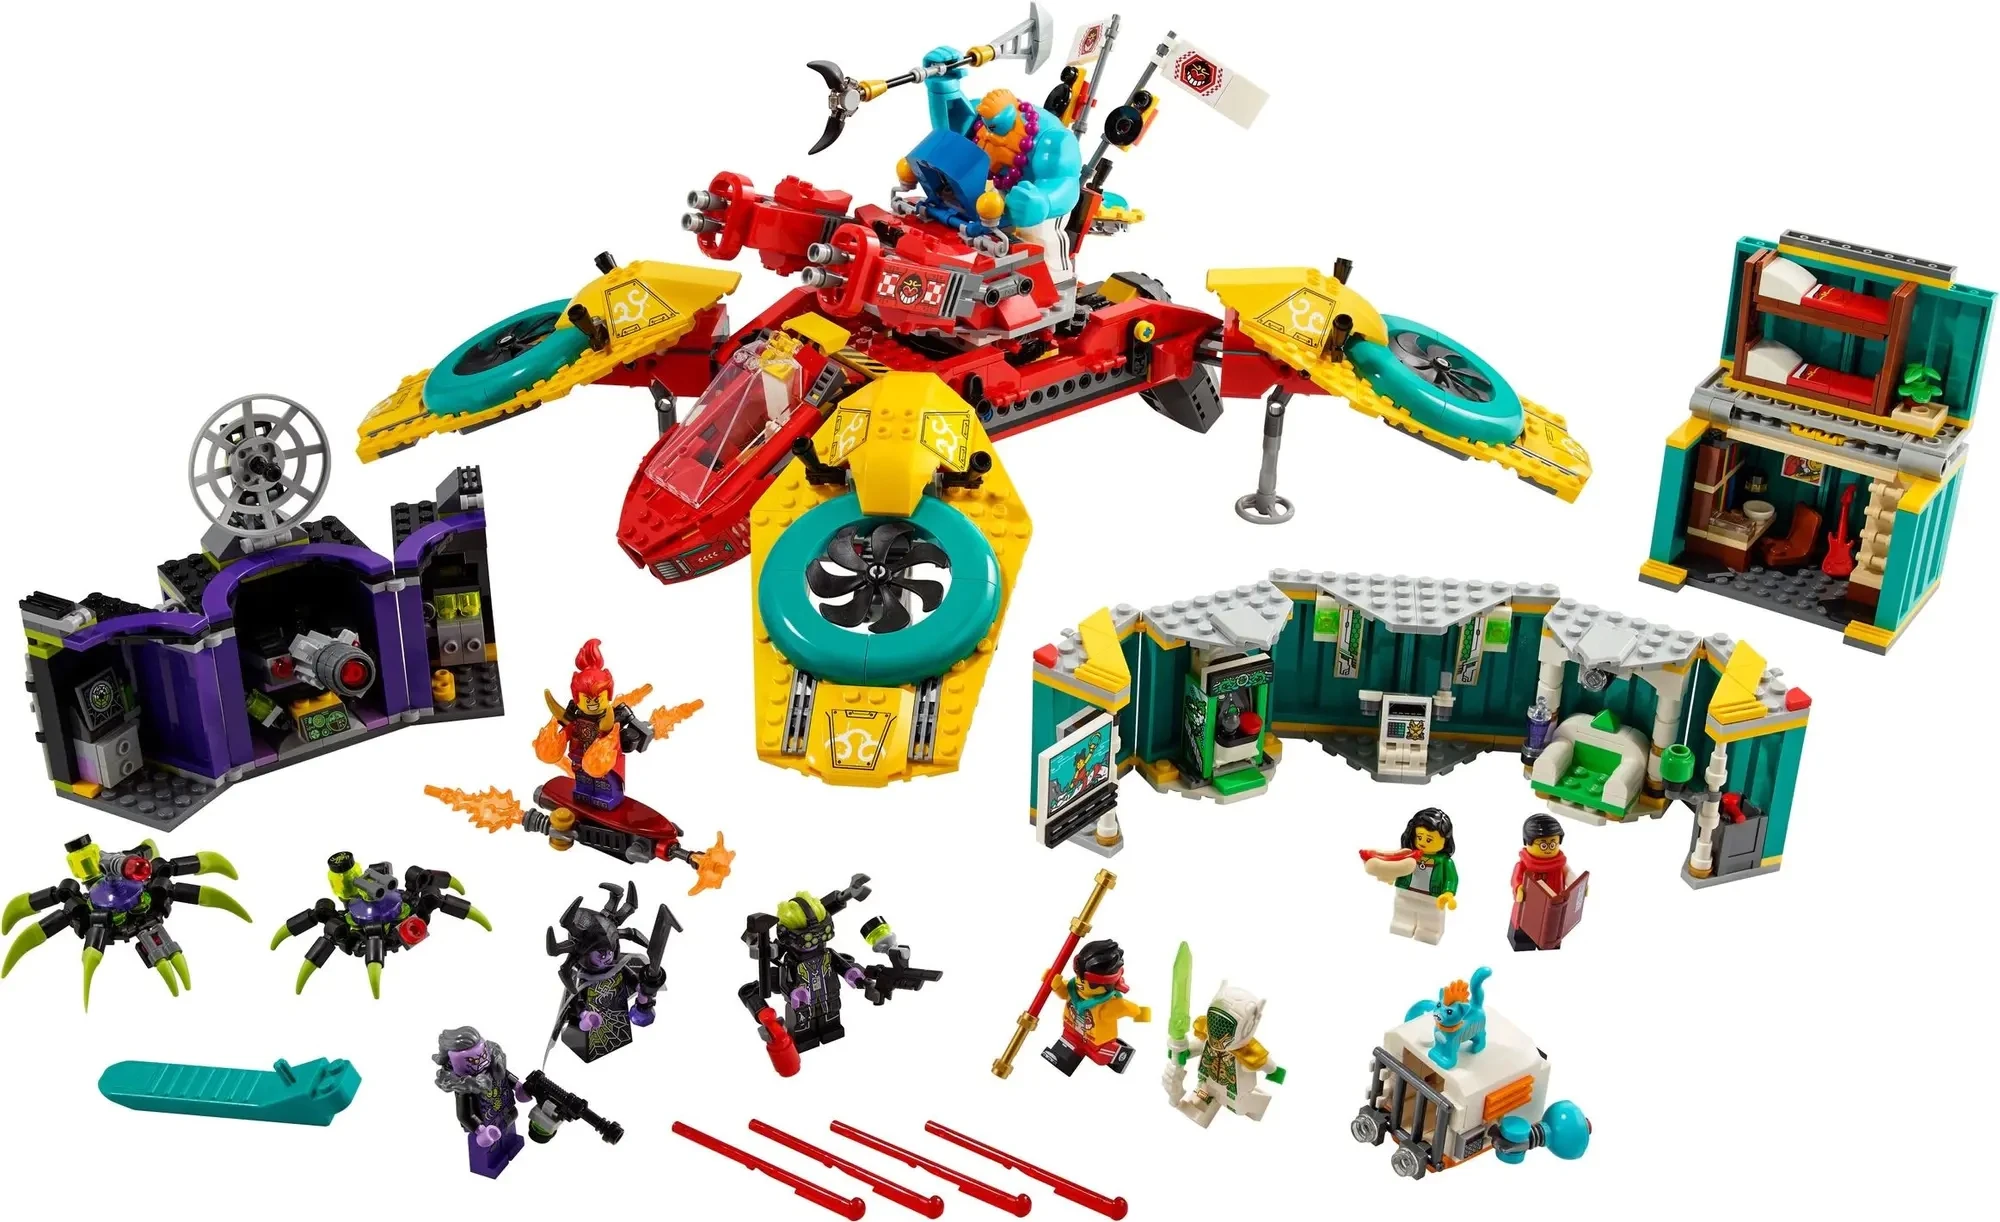 

Wukong Golden Mech Monkey King Building Blocks Compatible with Lego 80023 Robot Mecha Model Bricks Toys Kids Christmas Gifts